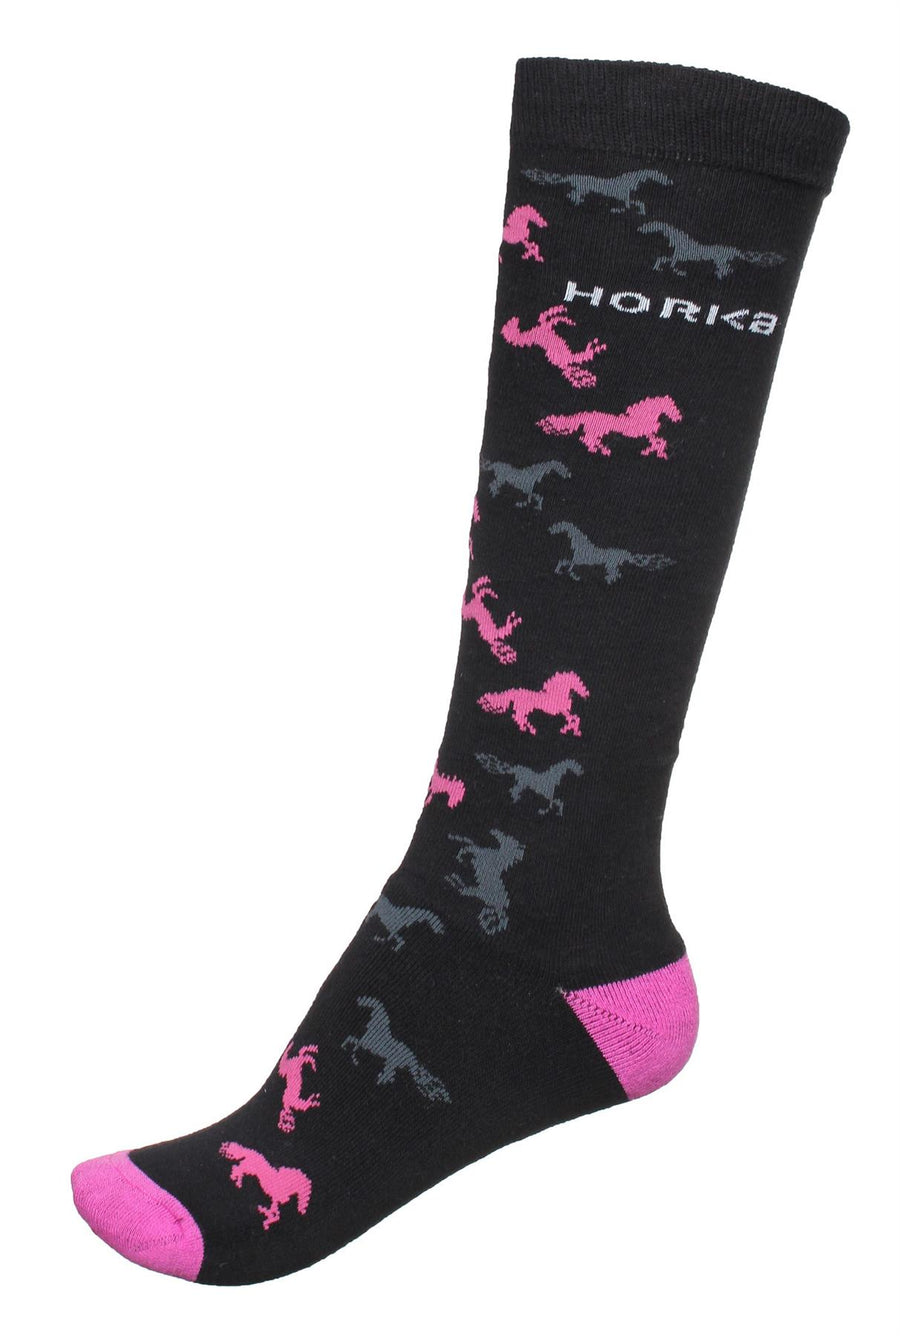 Horka Socks Check Black/Pink Extra Small